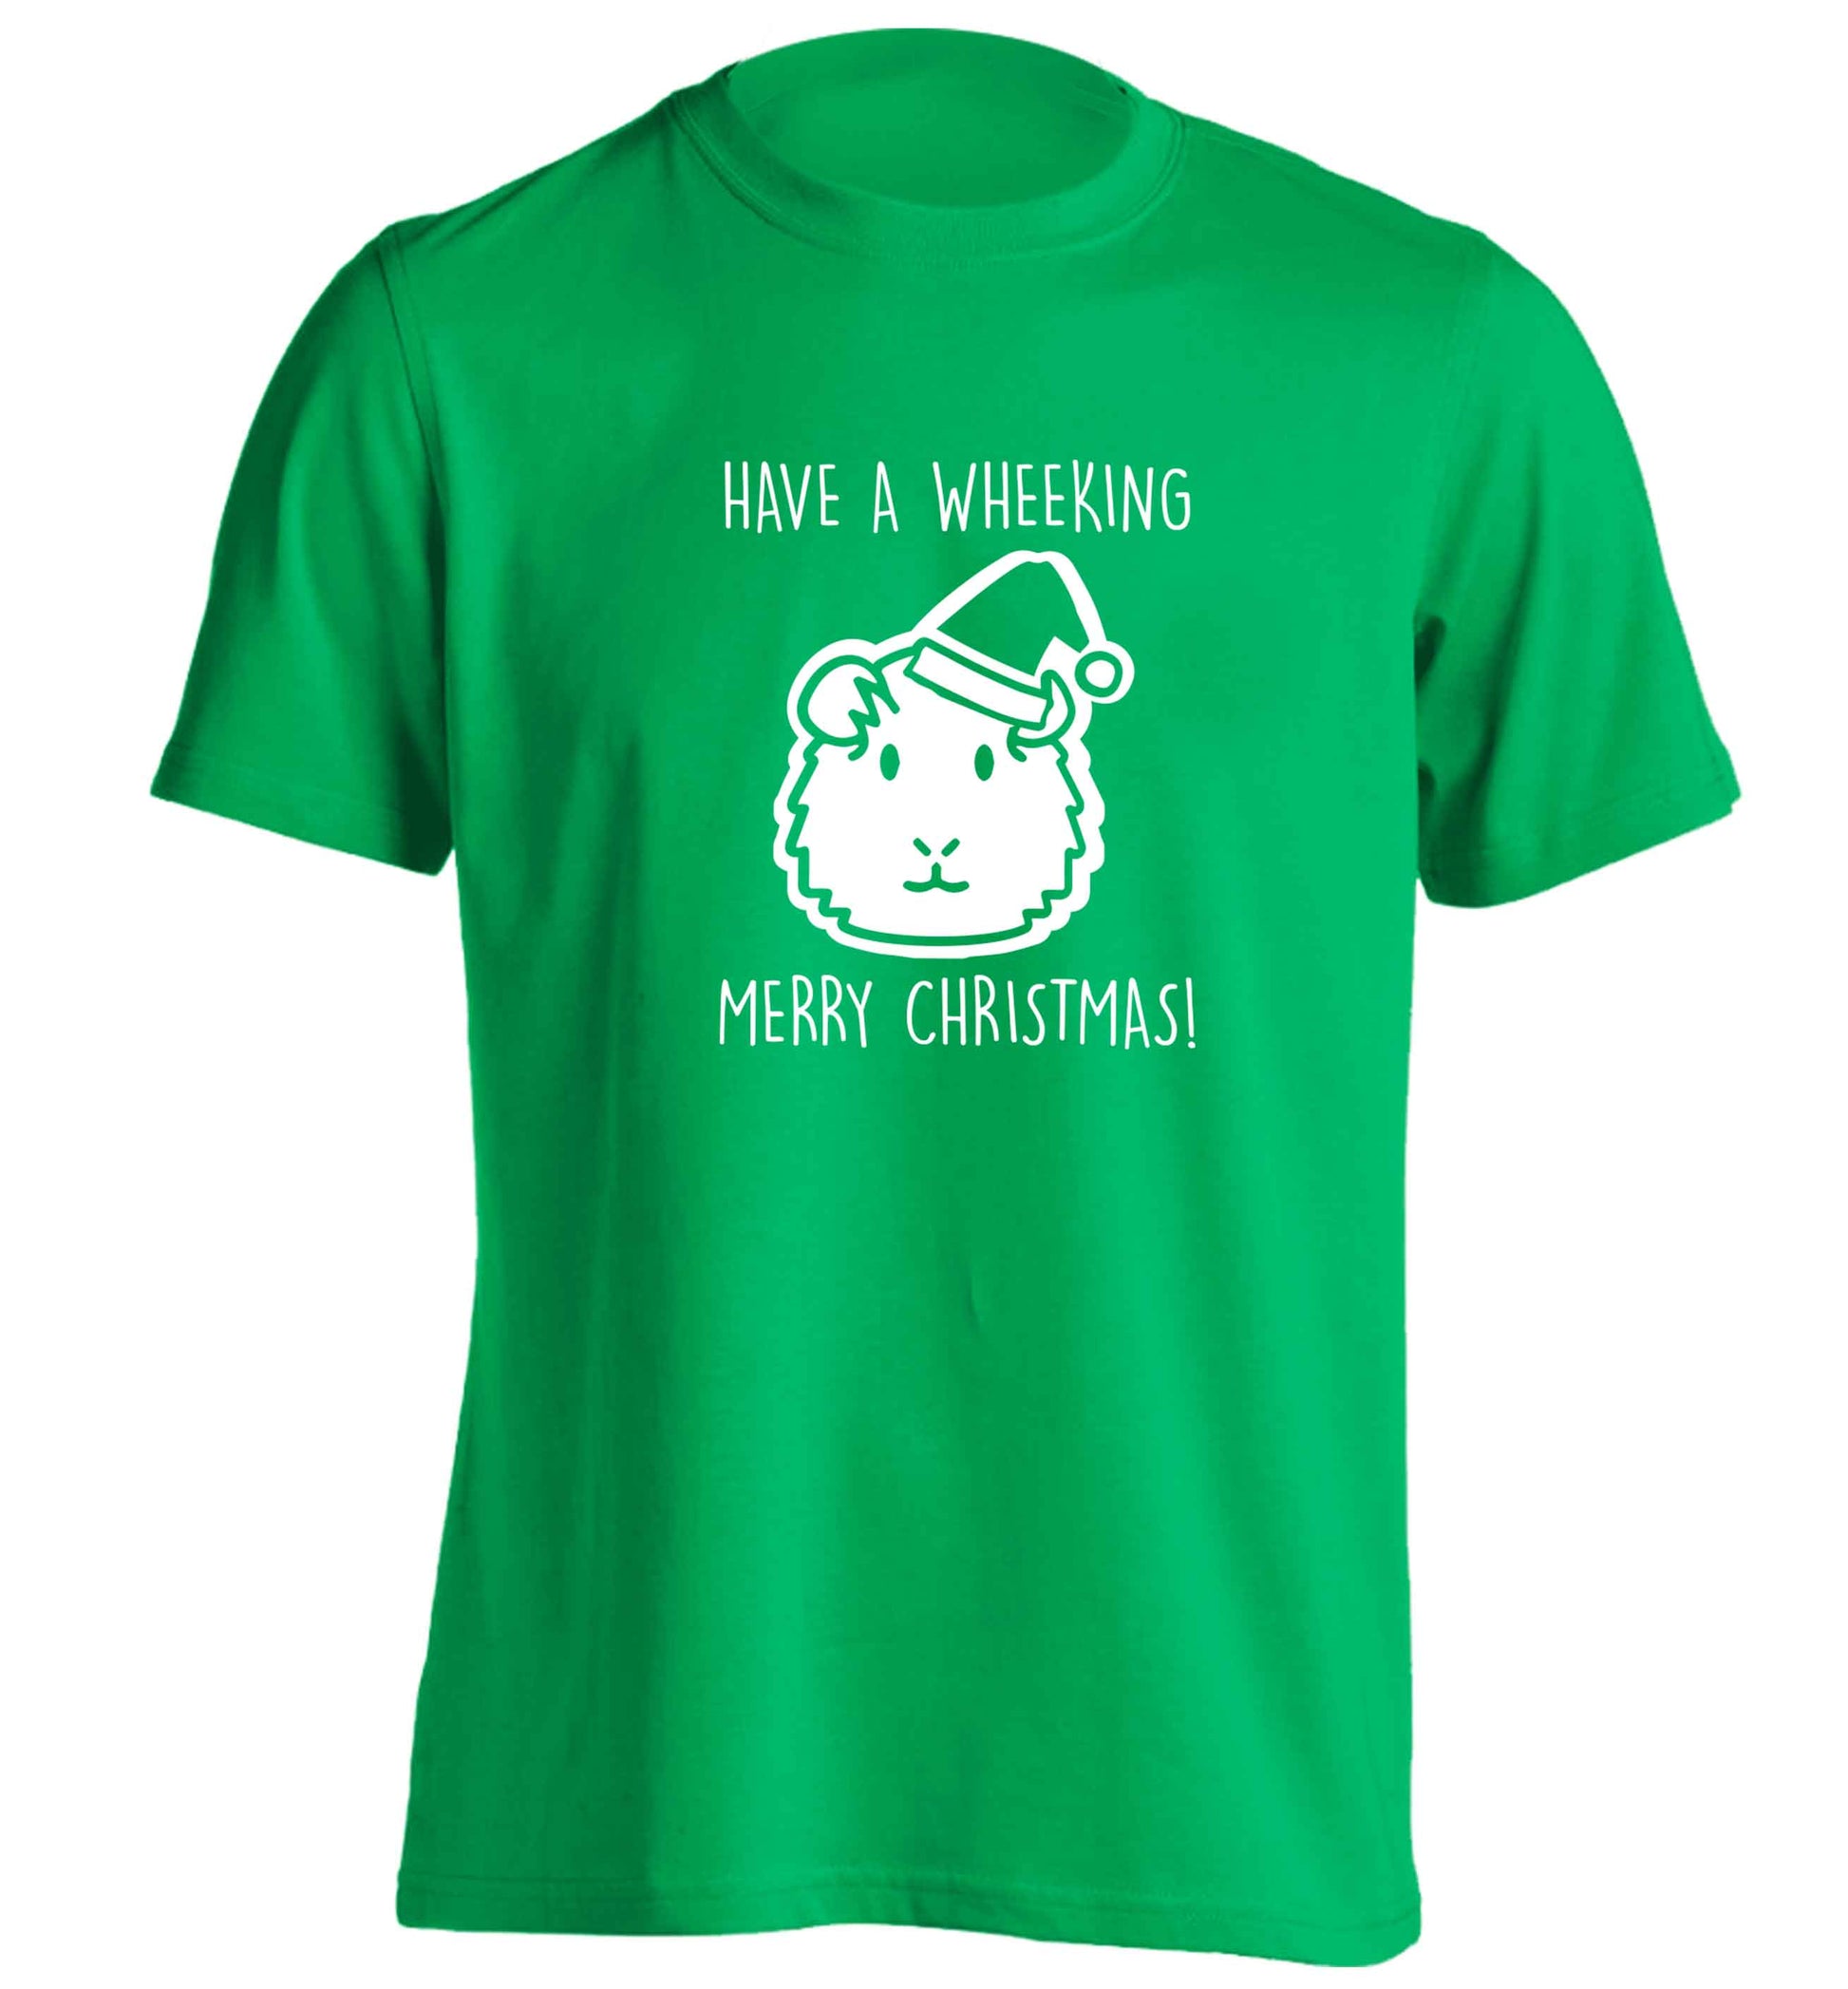 Have a wheeking merry Christmas adults unisex green Tshirt 2XL